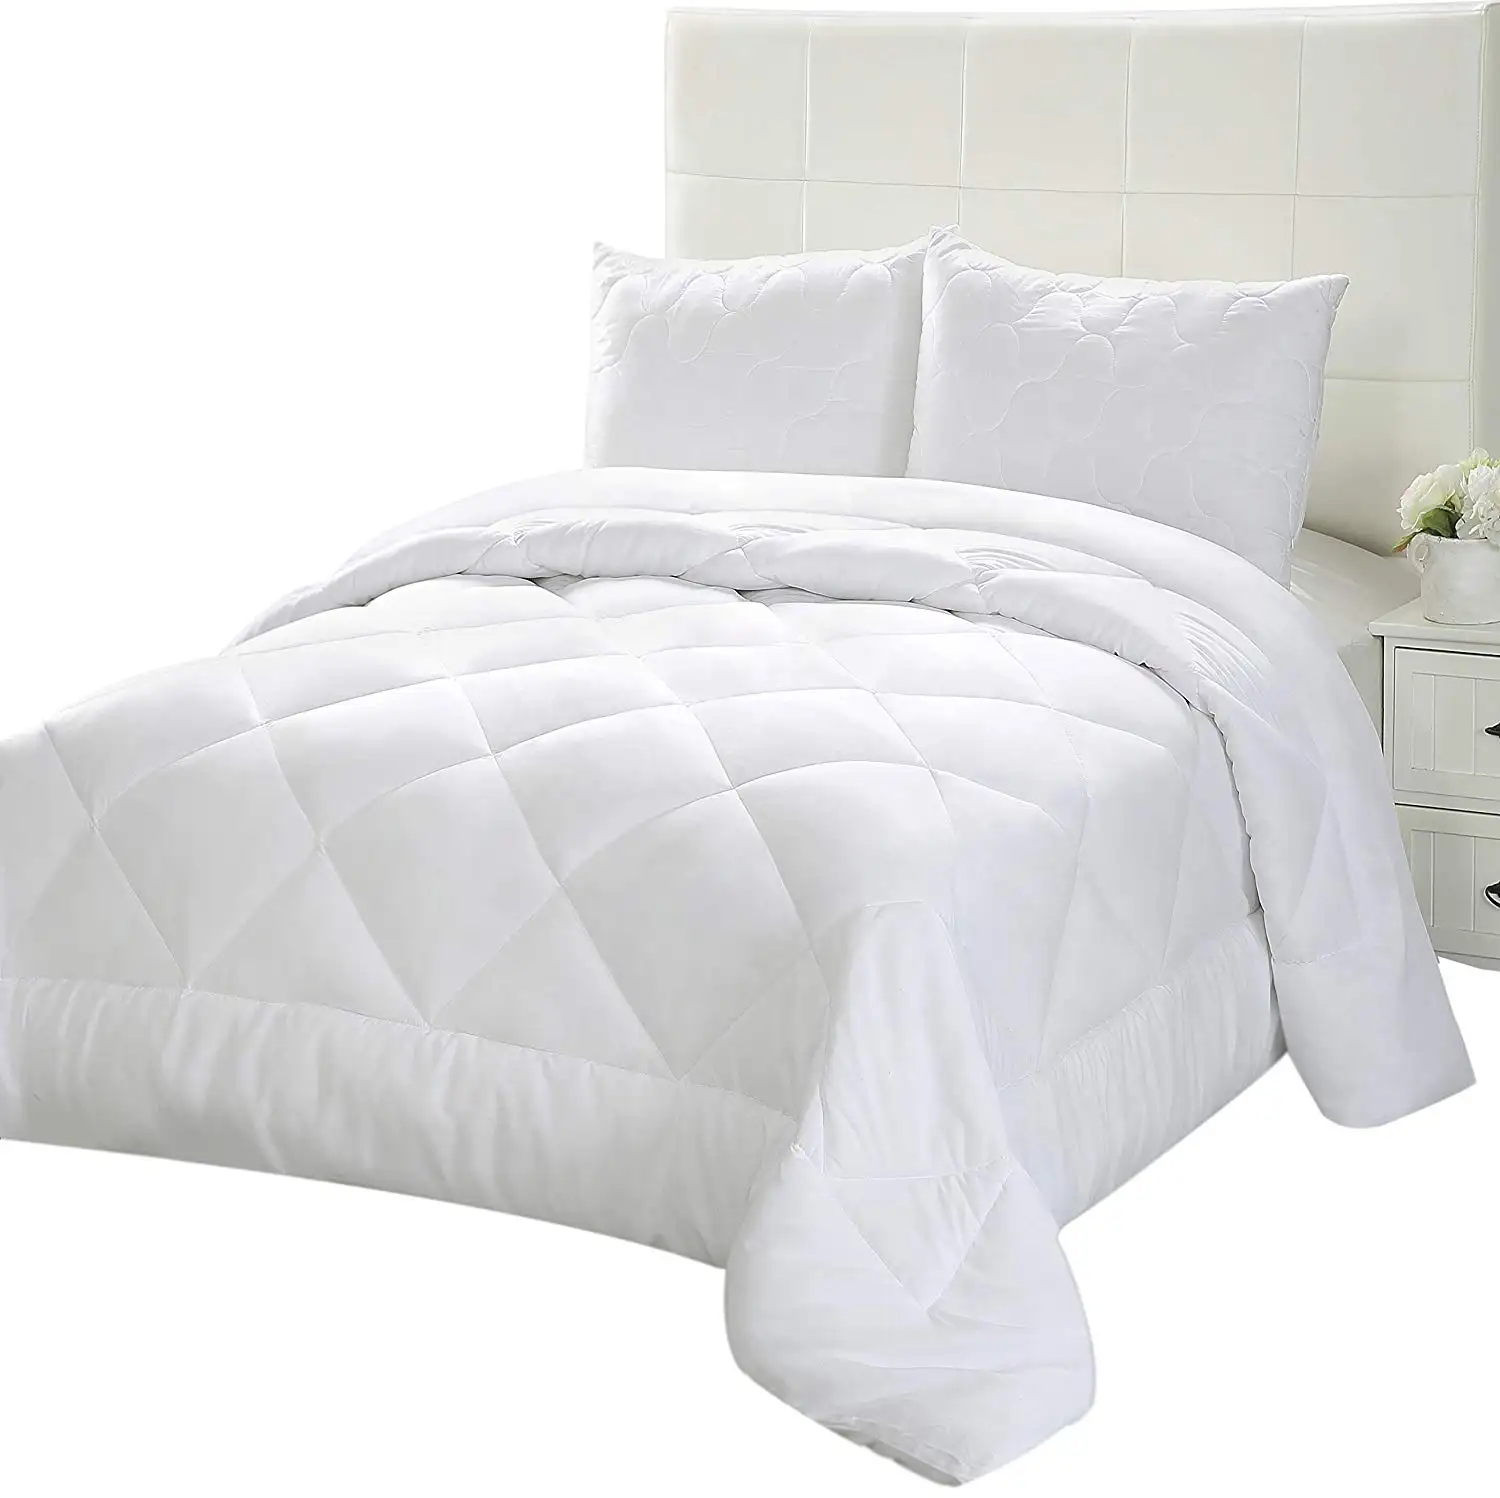 White Down Alternative Quilted Comforter-Hypoallergenic, 200gsm Plush Microfiber Fill Duvet Insert or Stand-Alone Comforter